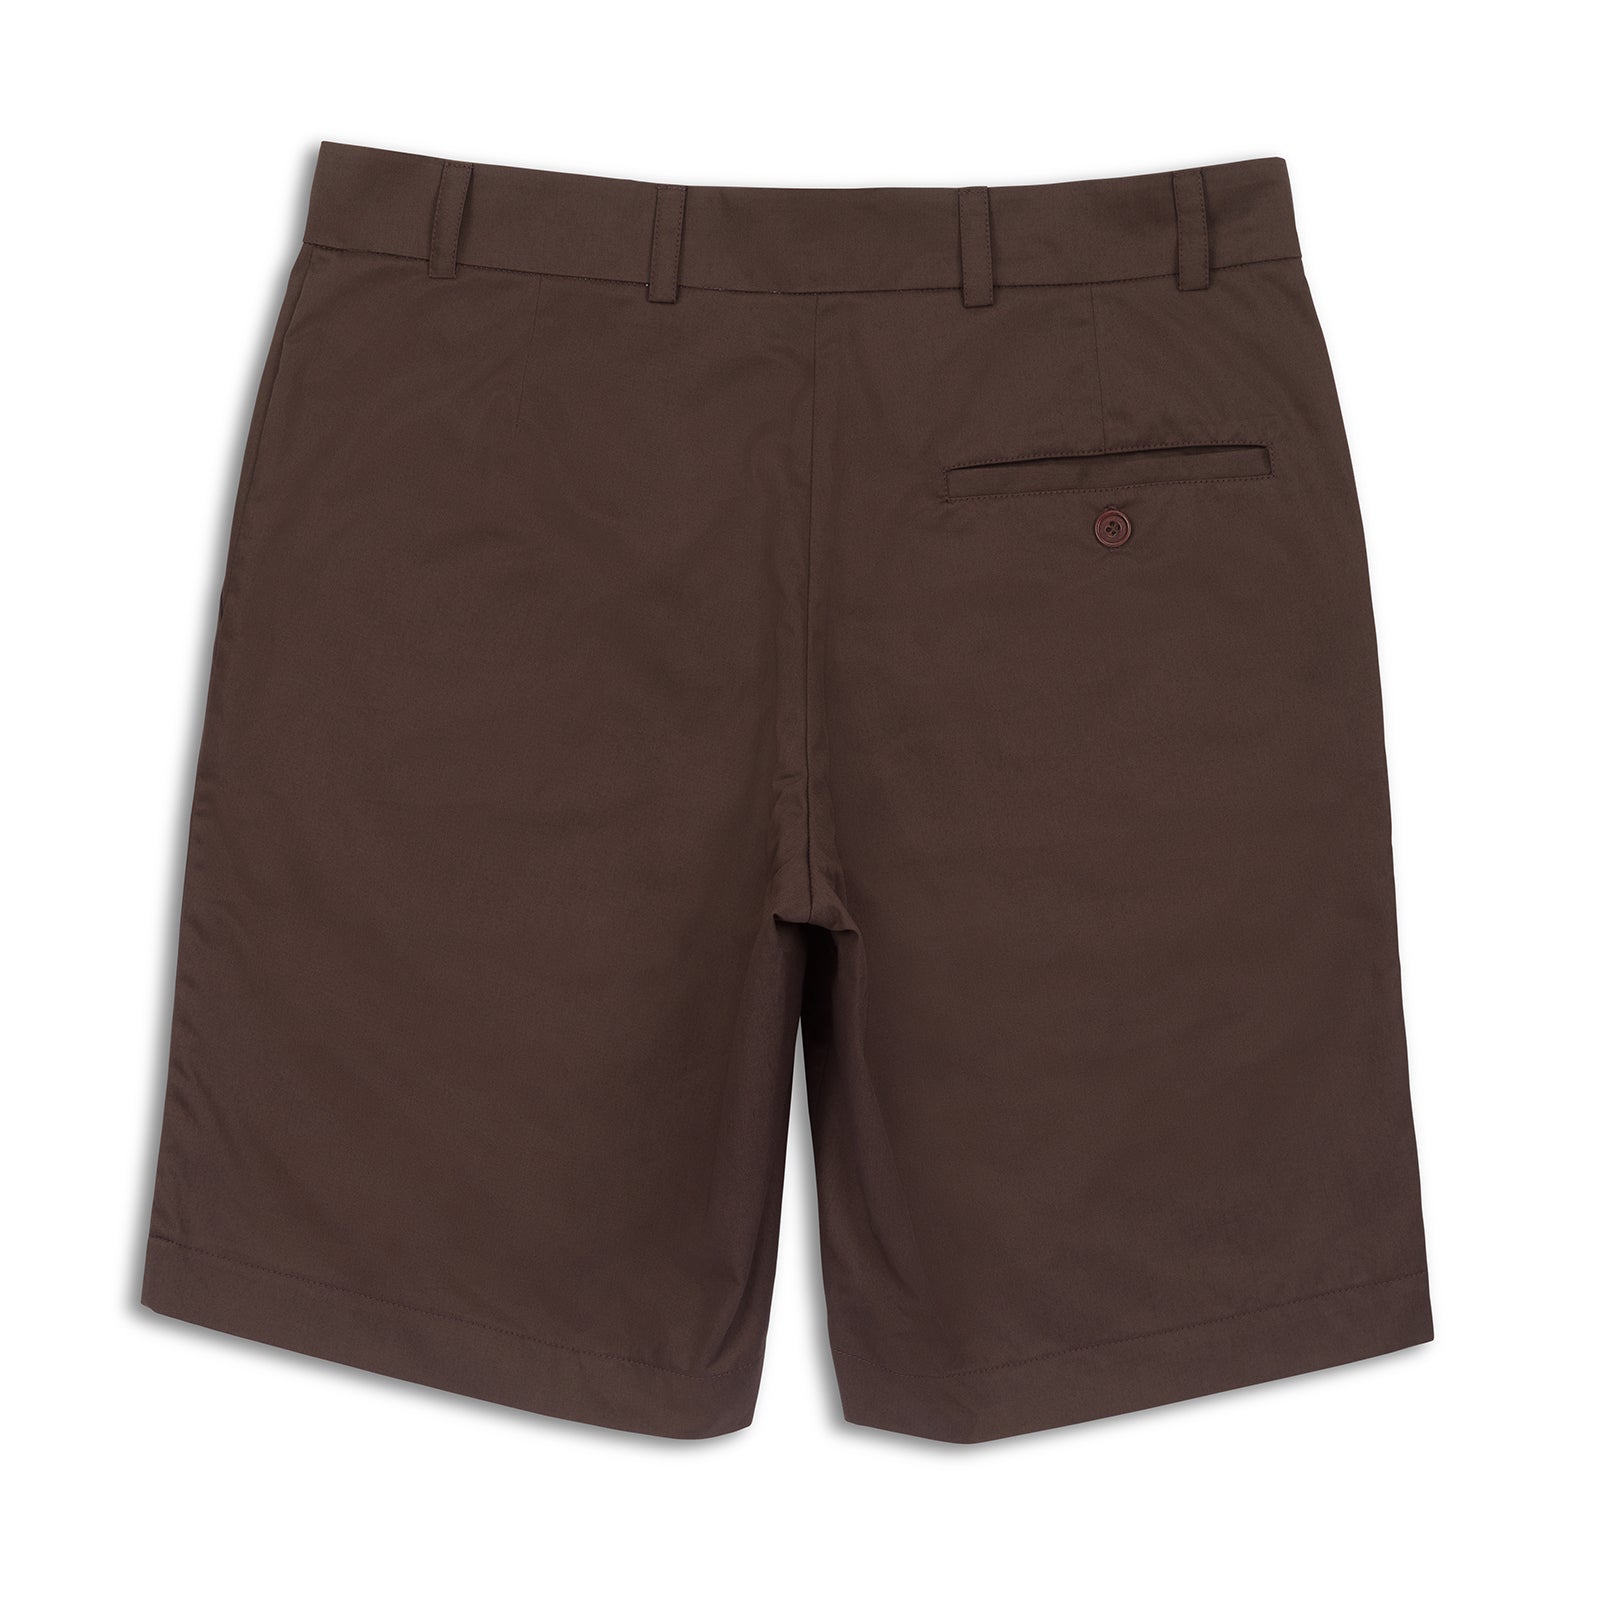 The Merchant Fox Cotton Shorts in Brown